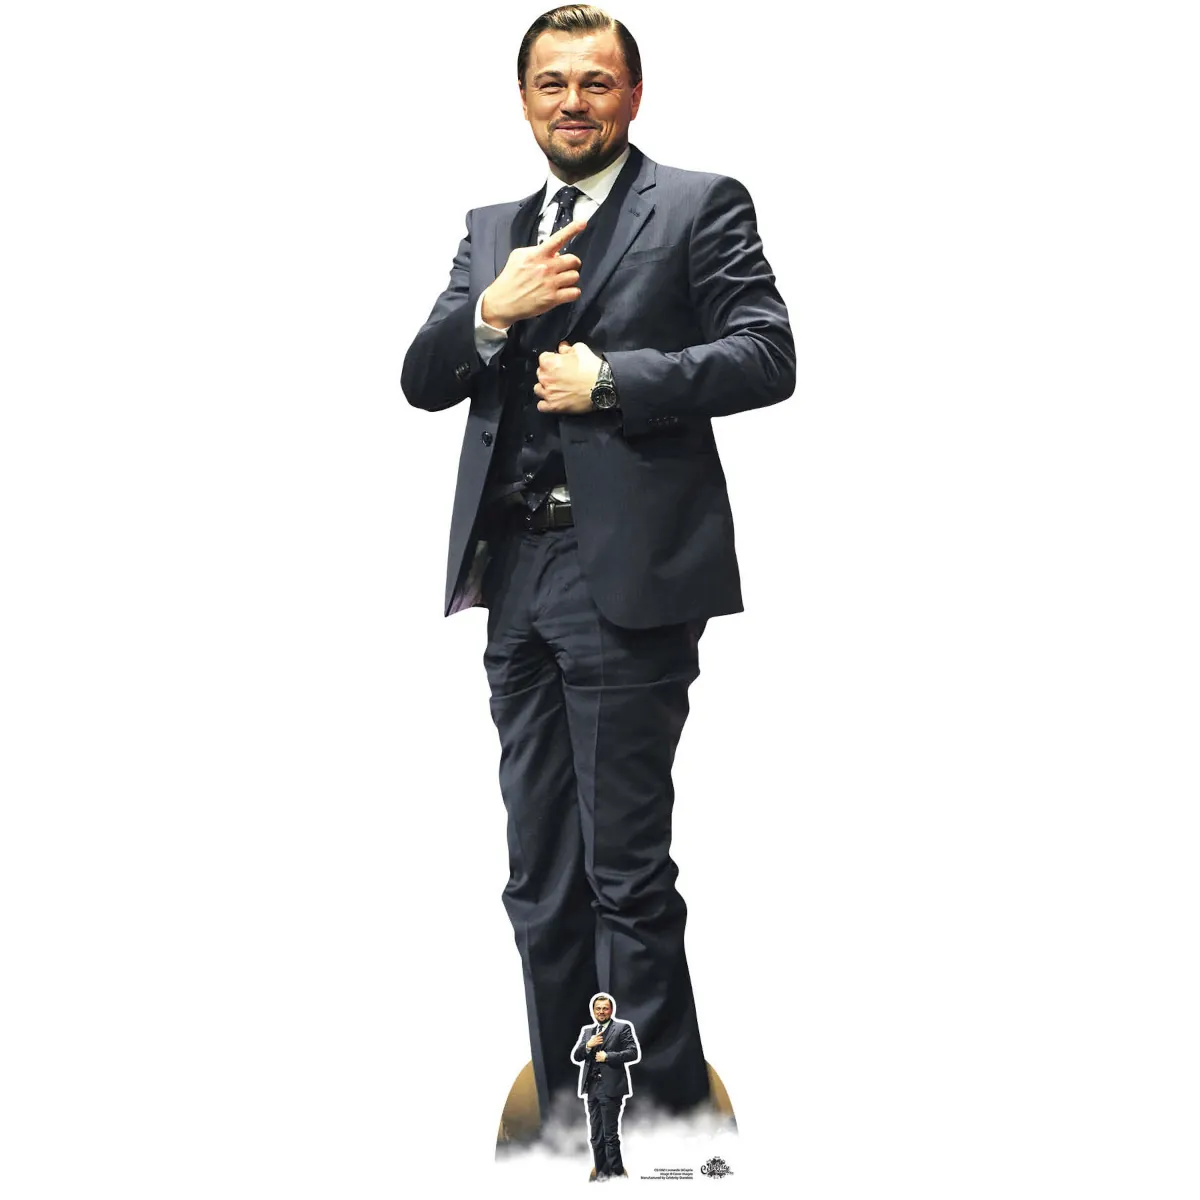 CS1063 Leonardo DiCaprio 'Boss' (American Actor) Lifesize + Mini Cardboard Cutout Standee Front